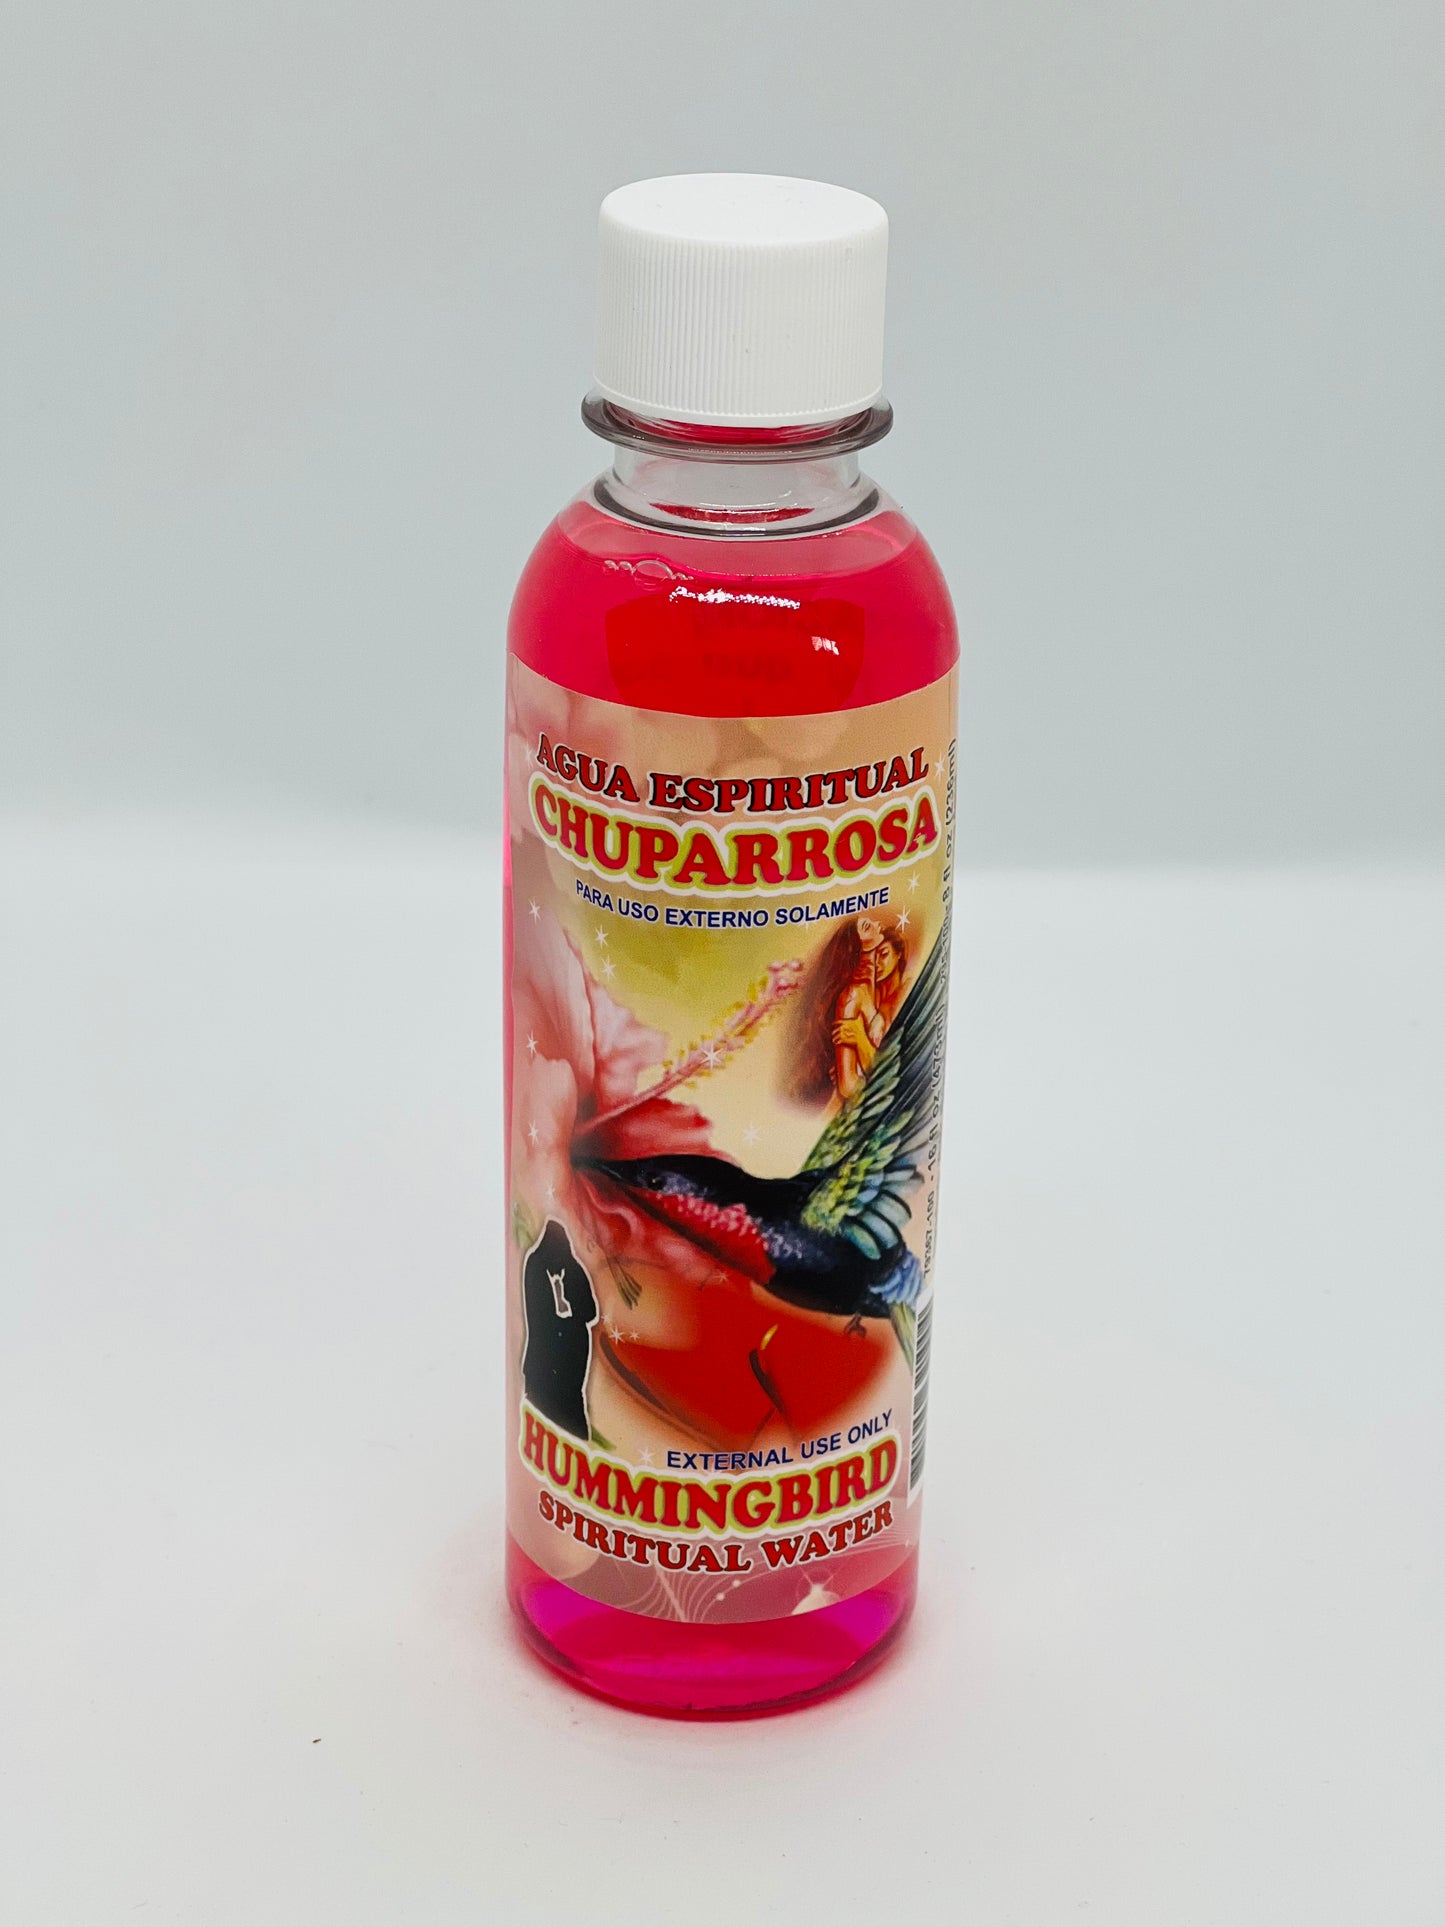 Hummingbird Spiritual Water/Chuparrosa Agua Espiritual